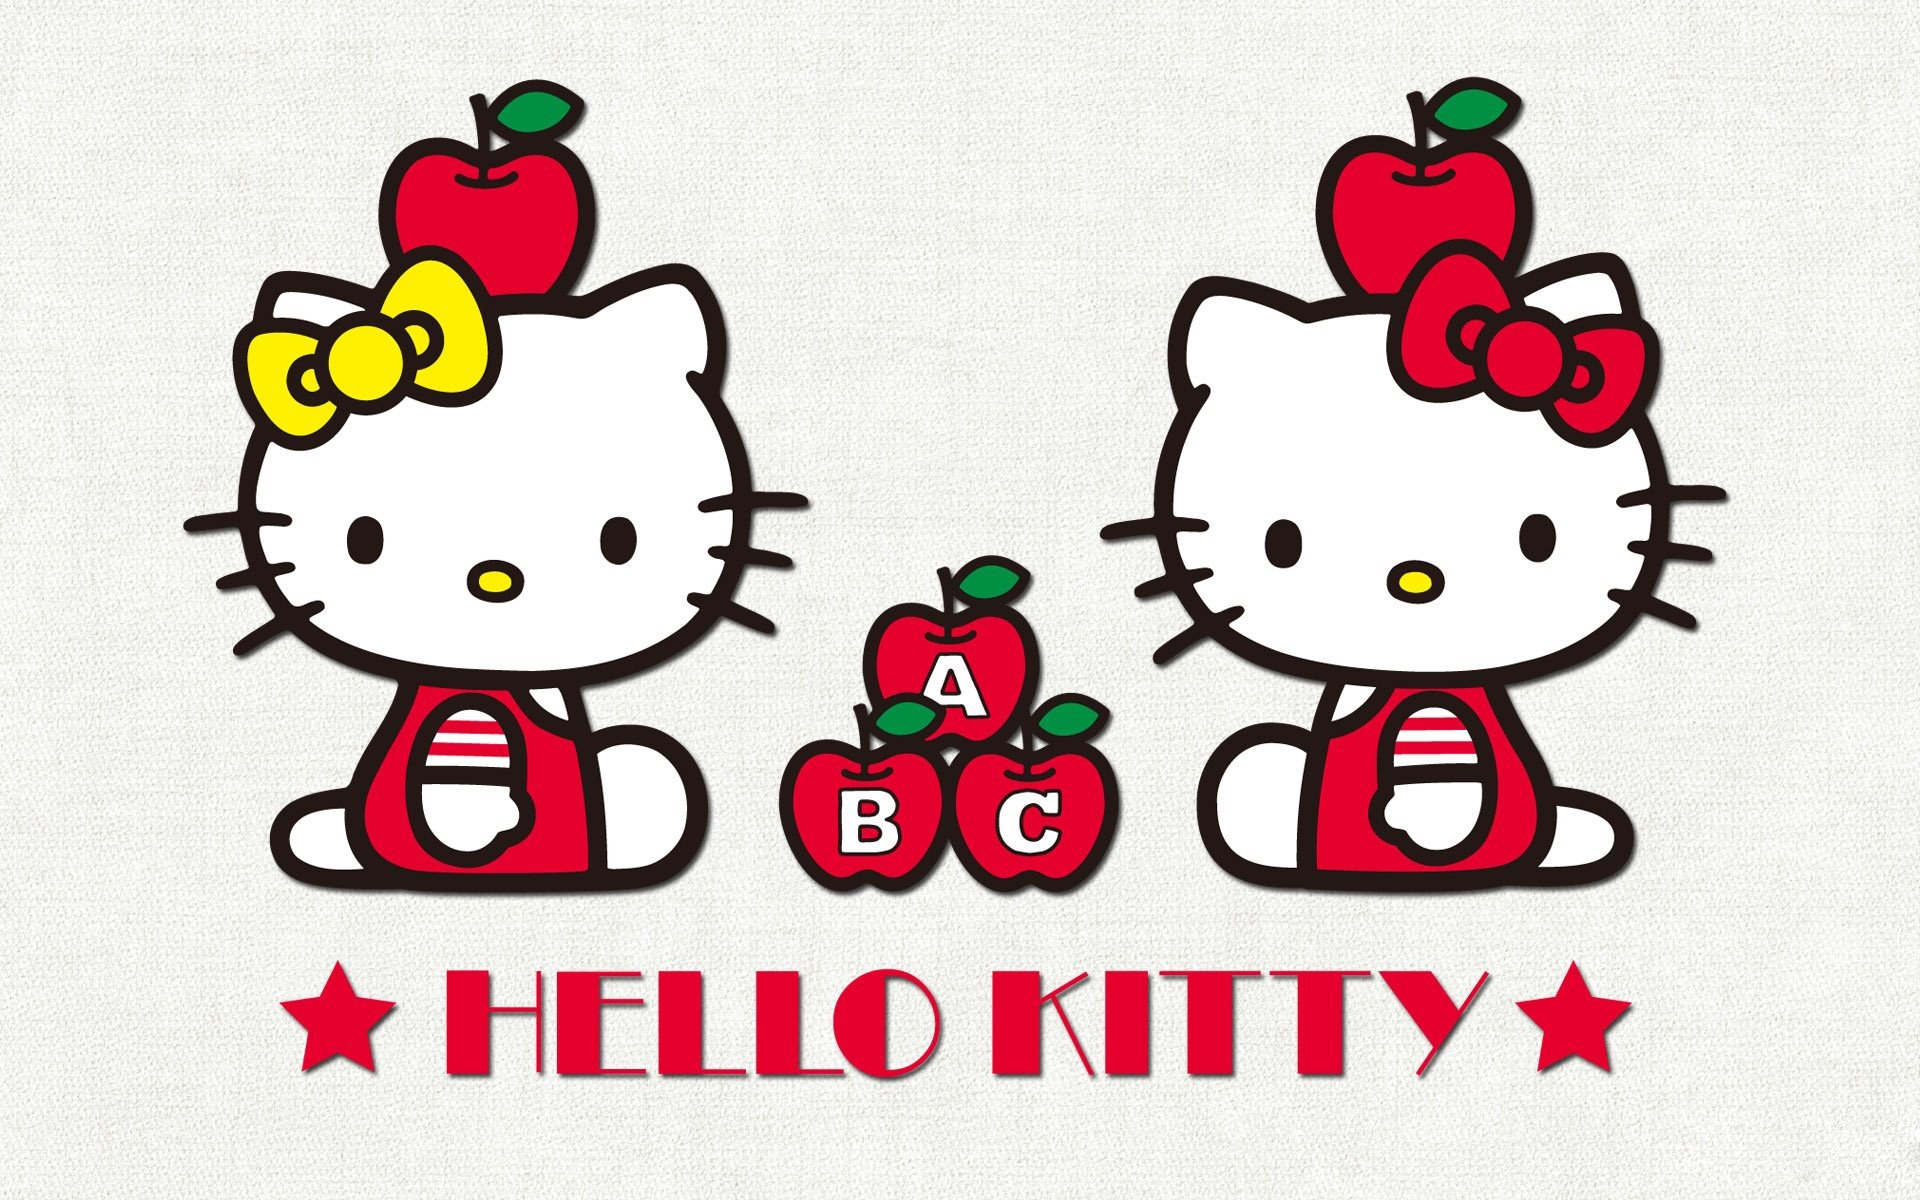 Название hello. Хелло Китти. Хеллоу Китти hello Kitty. Картинки с Хеллоу Китти. Плакаты Хэллоу Китти.